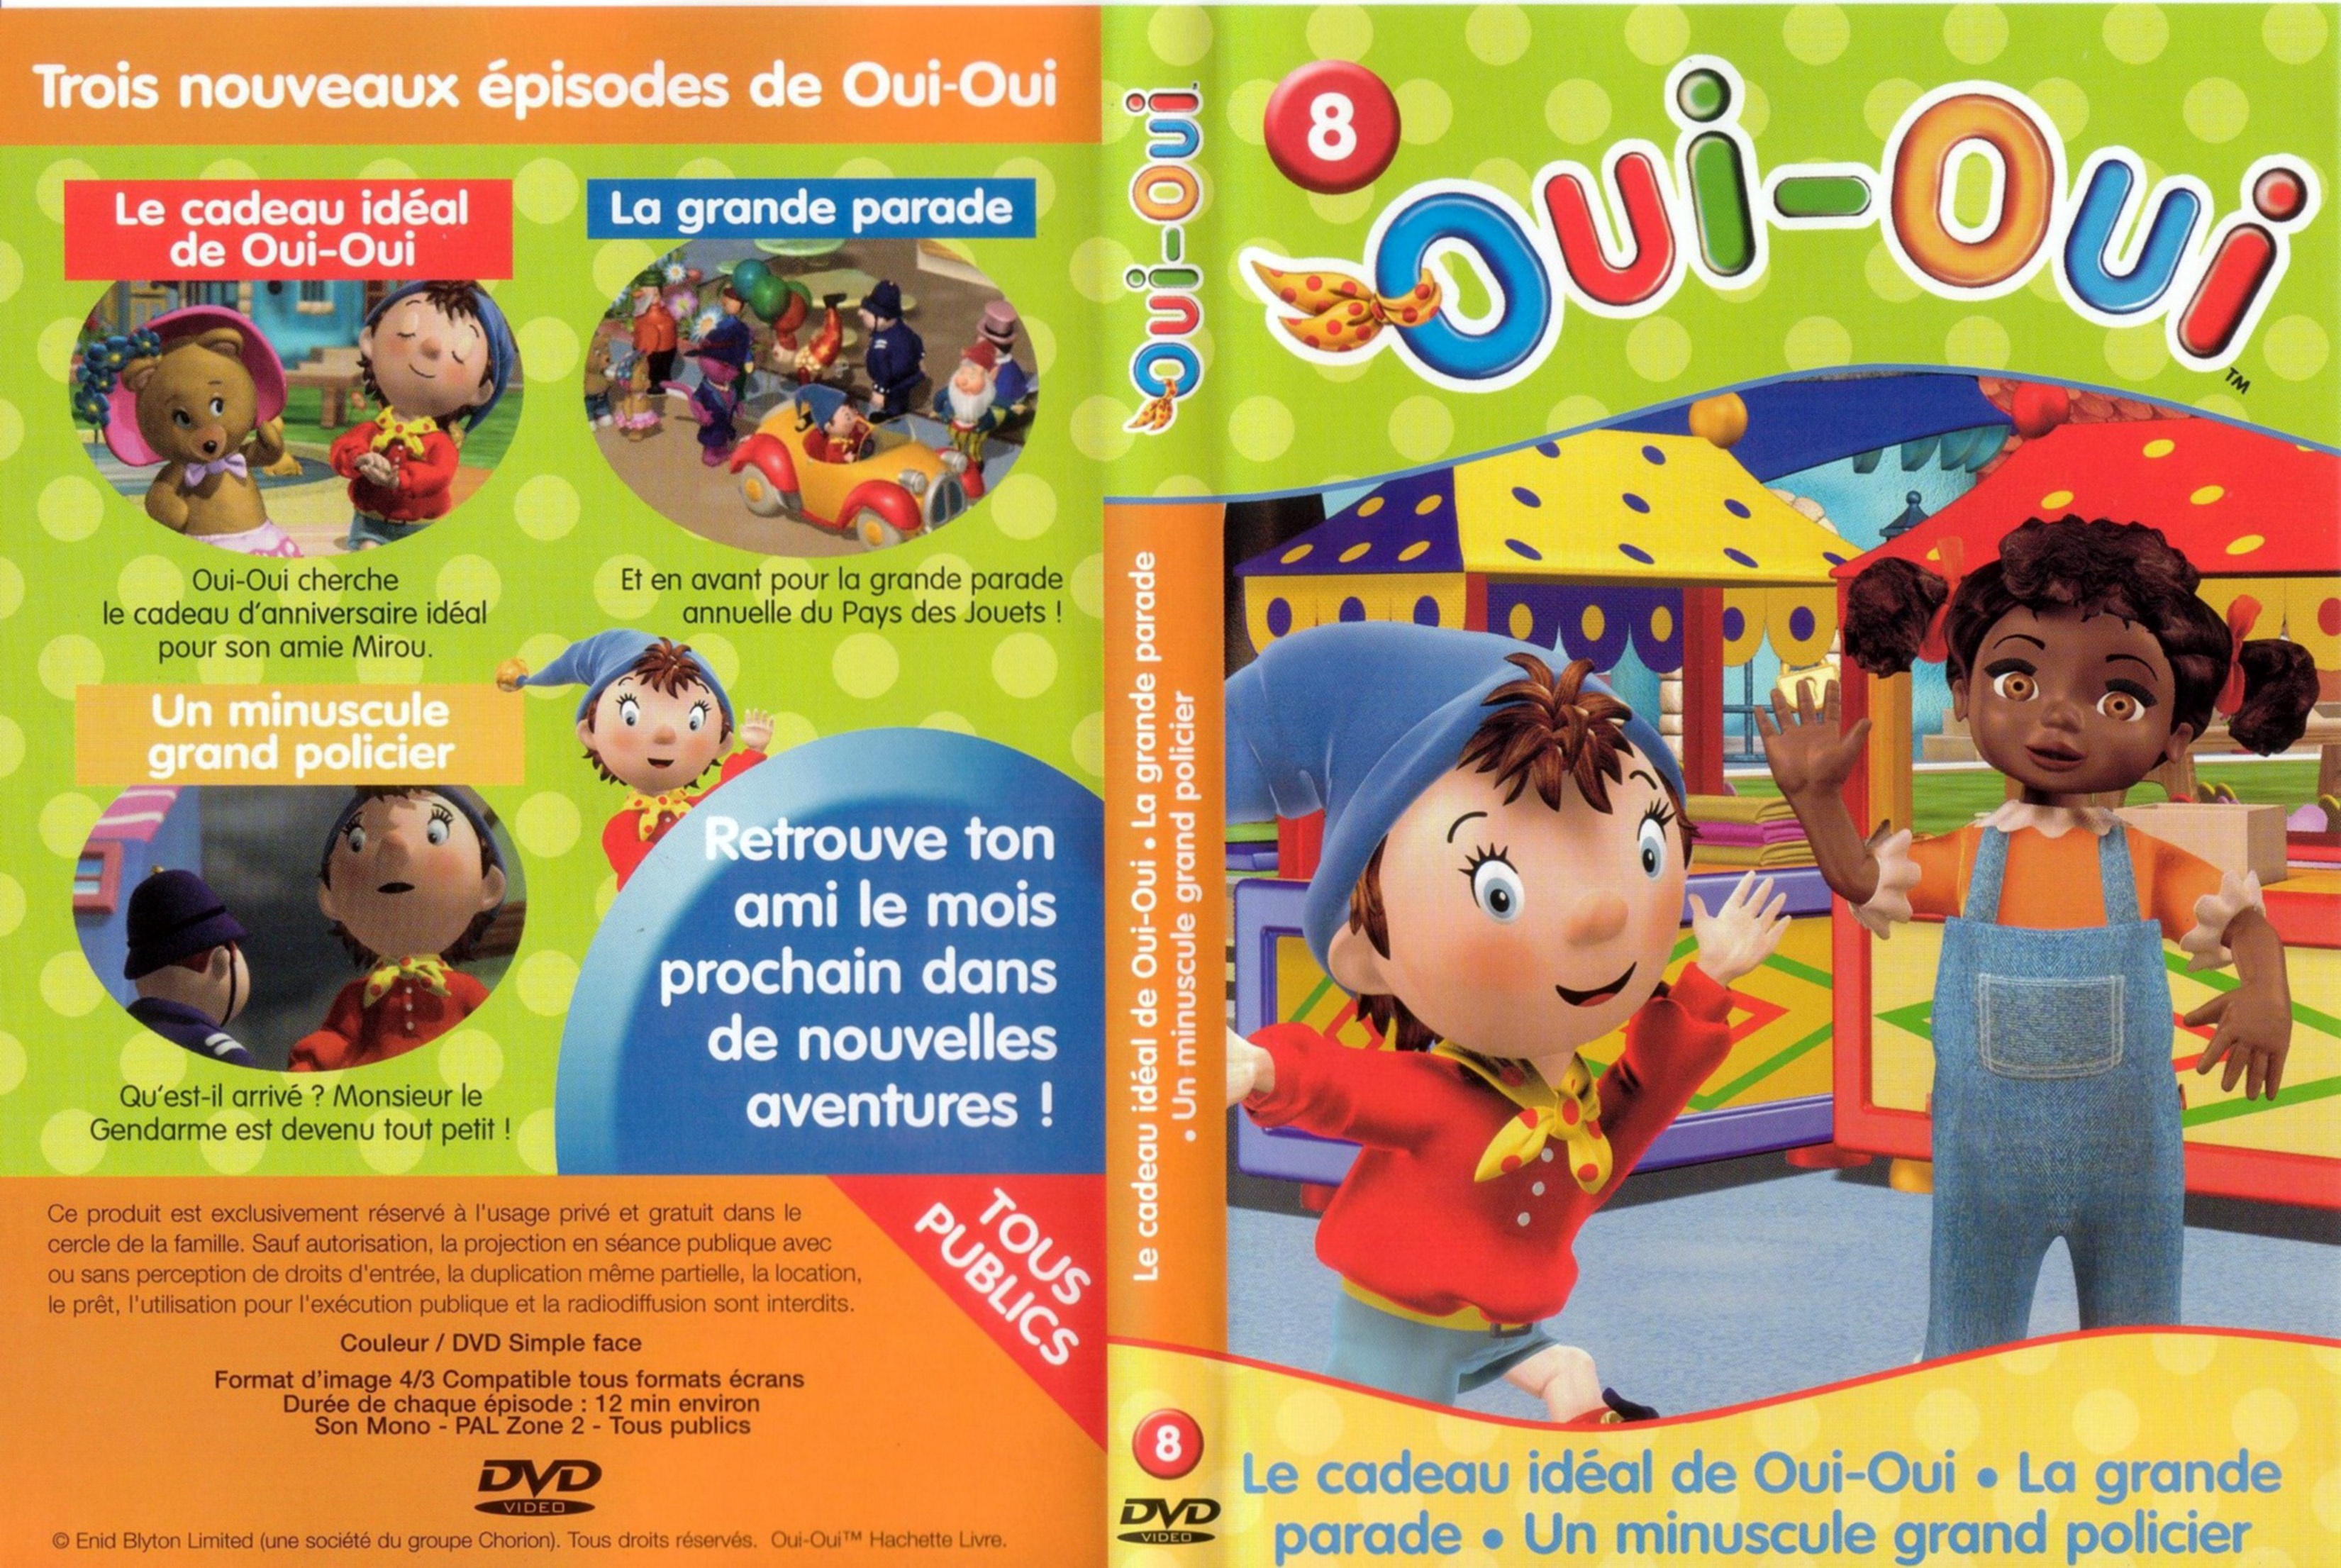 Jaquette DVD Oui-Oui vol 08